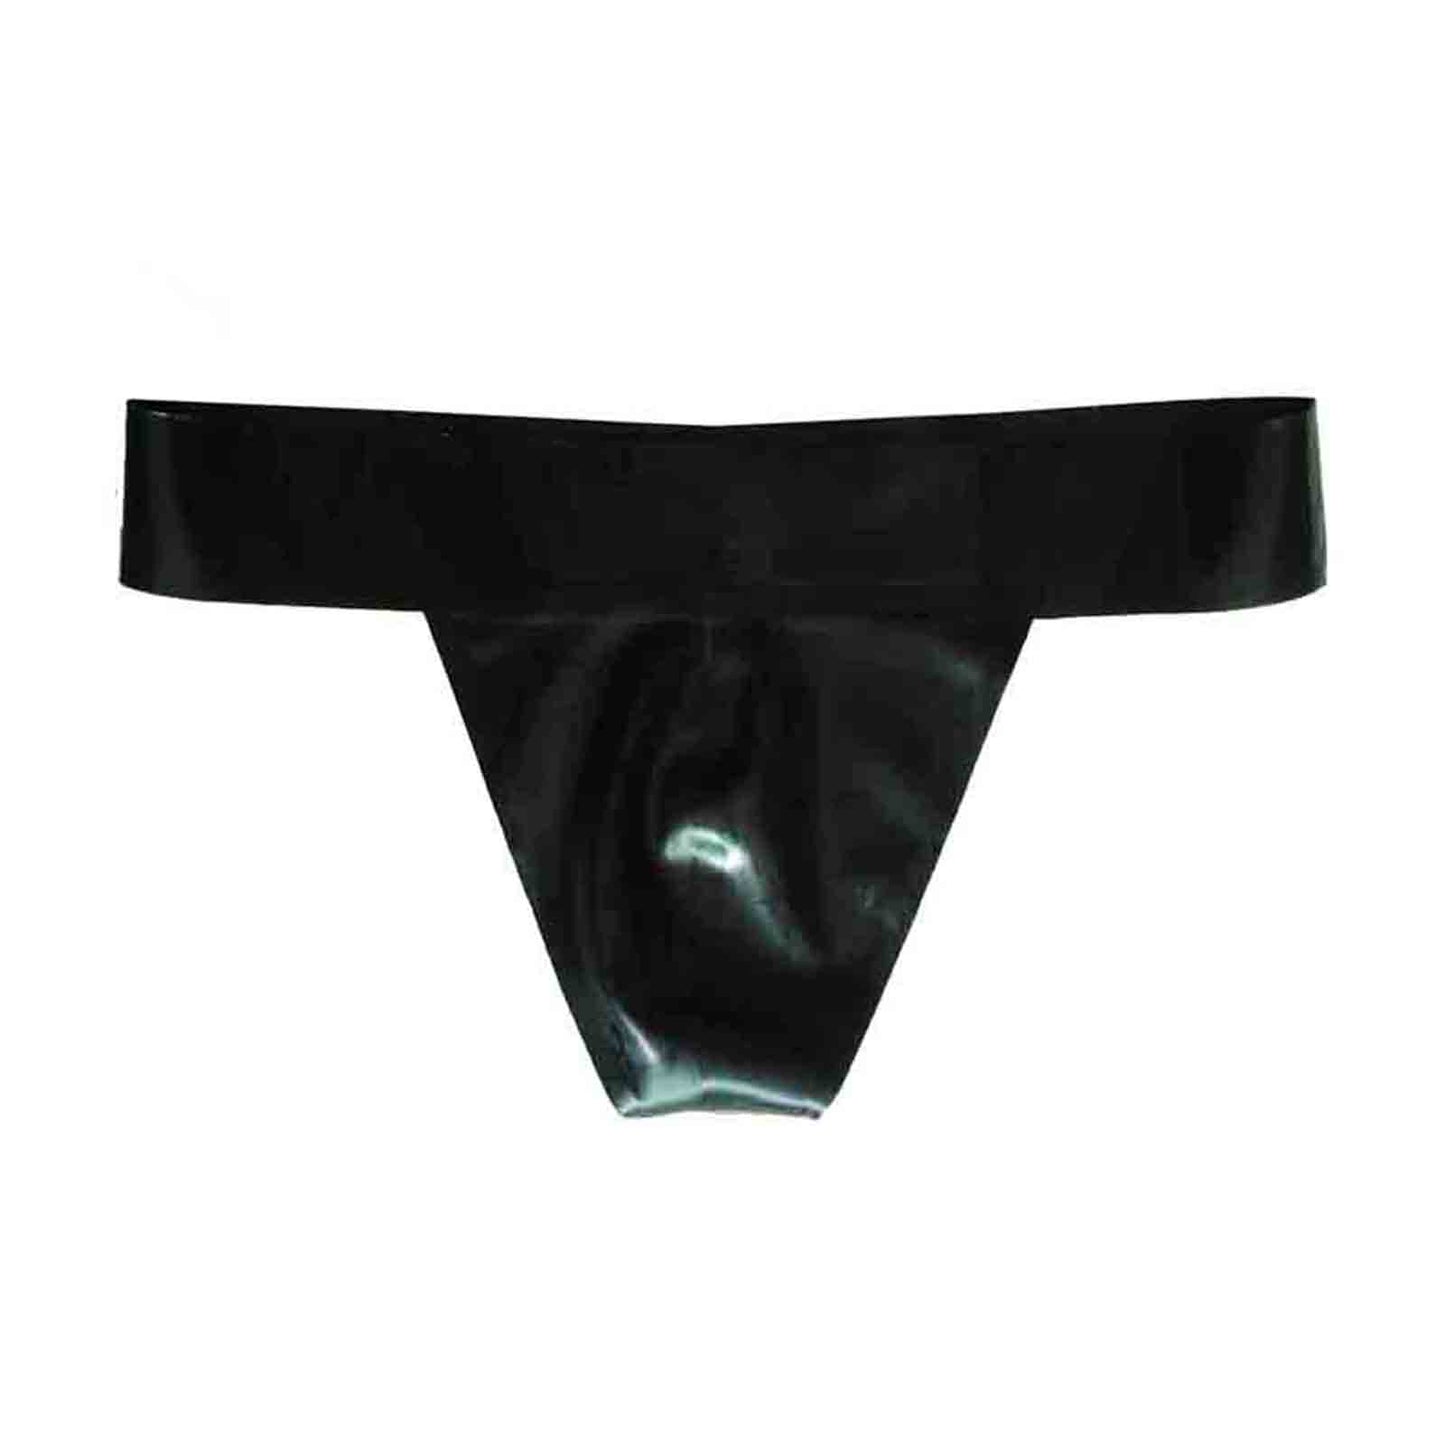 MONNIK Latex Lingerie Seamless Briefs Panties Tight Underwear Bottom Open for Catsuit